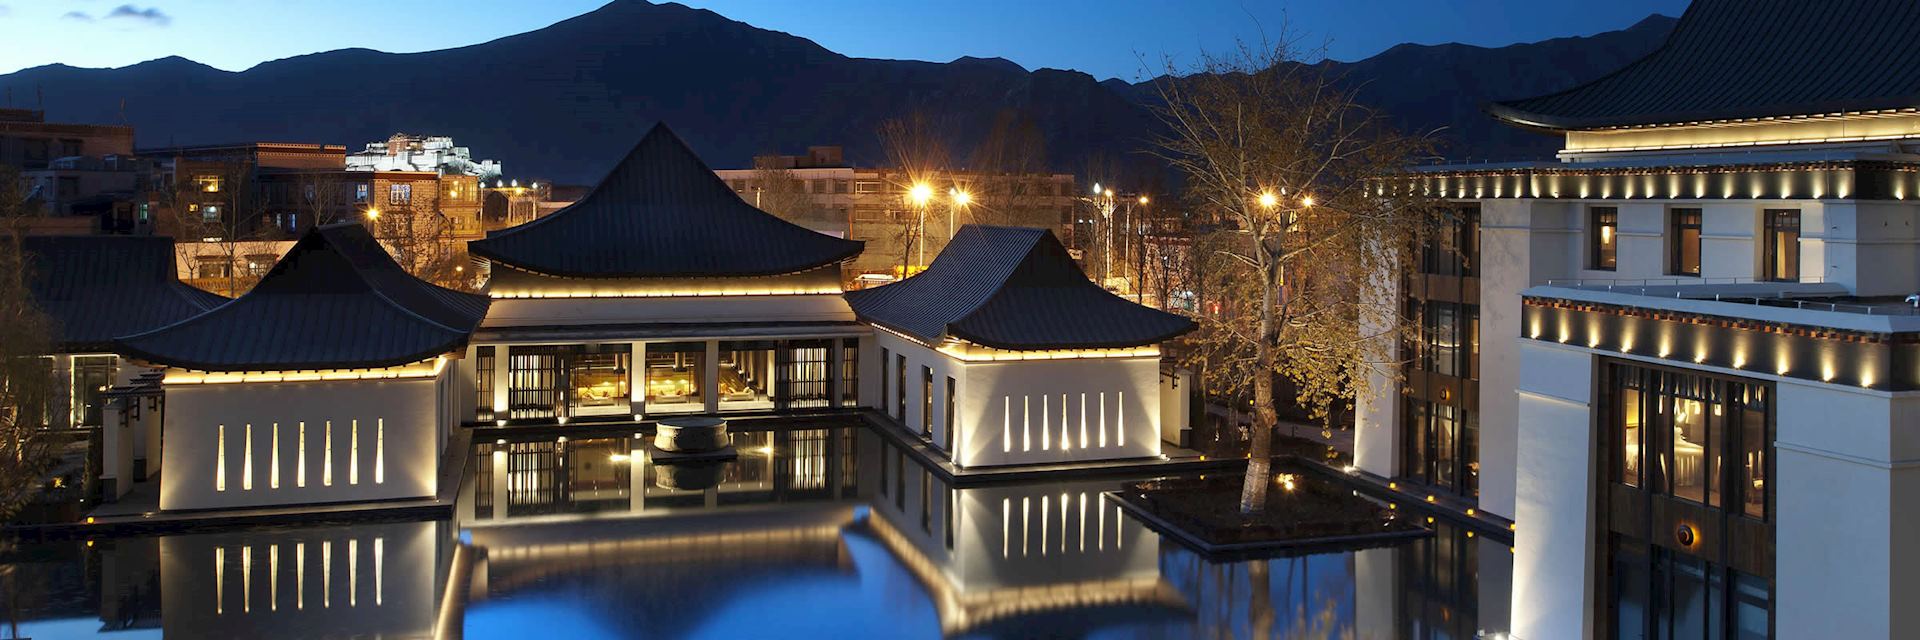 St Regis Lhasa Resort, Lhasa